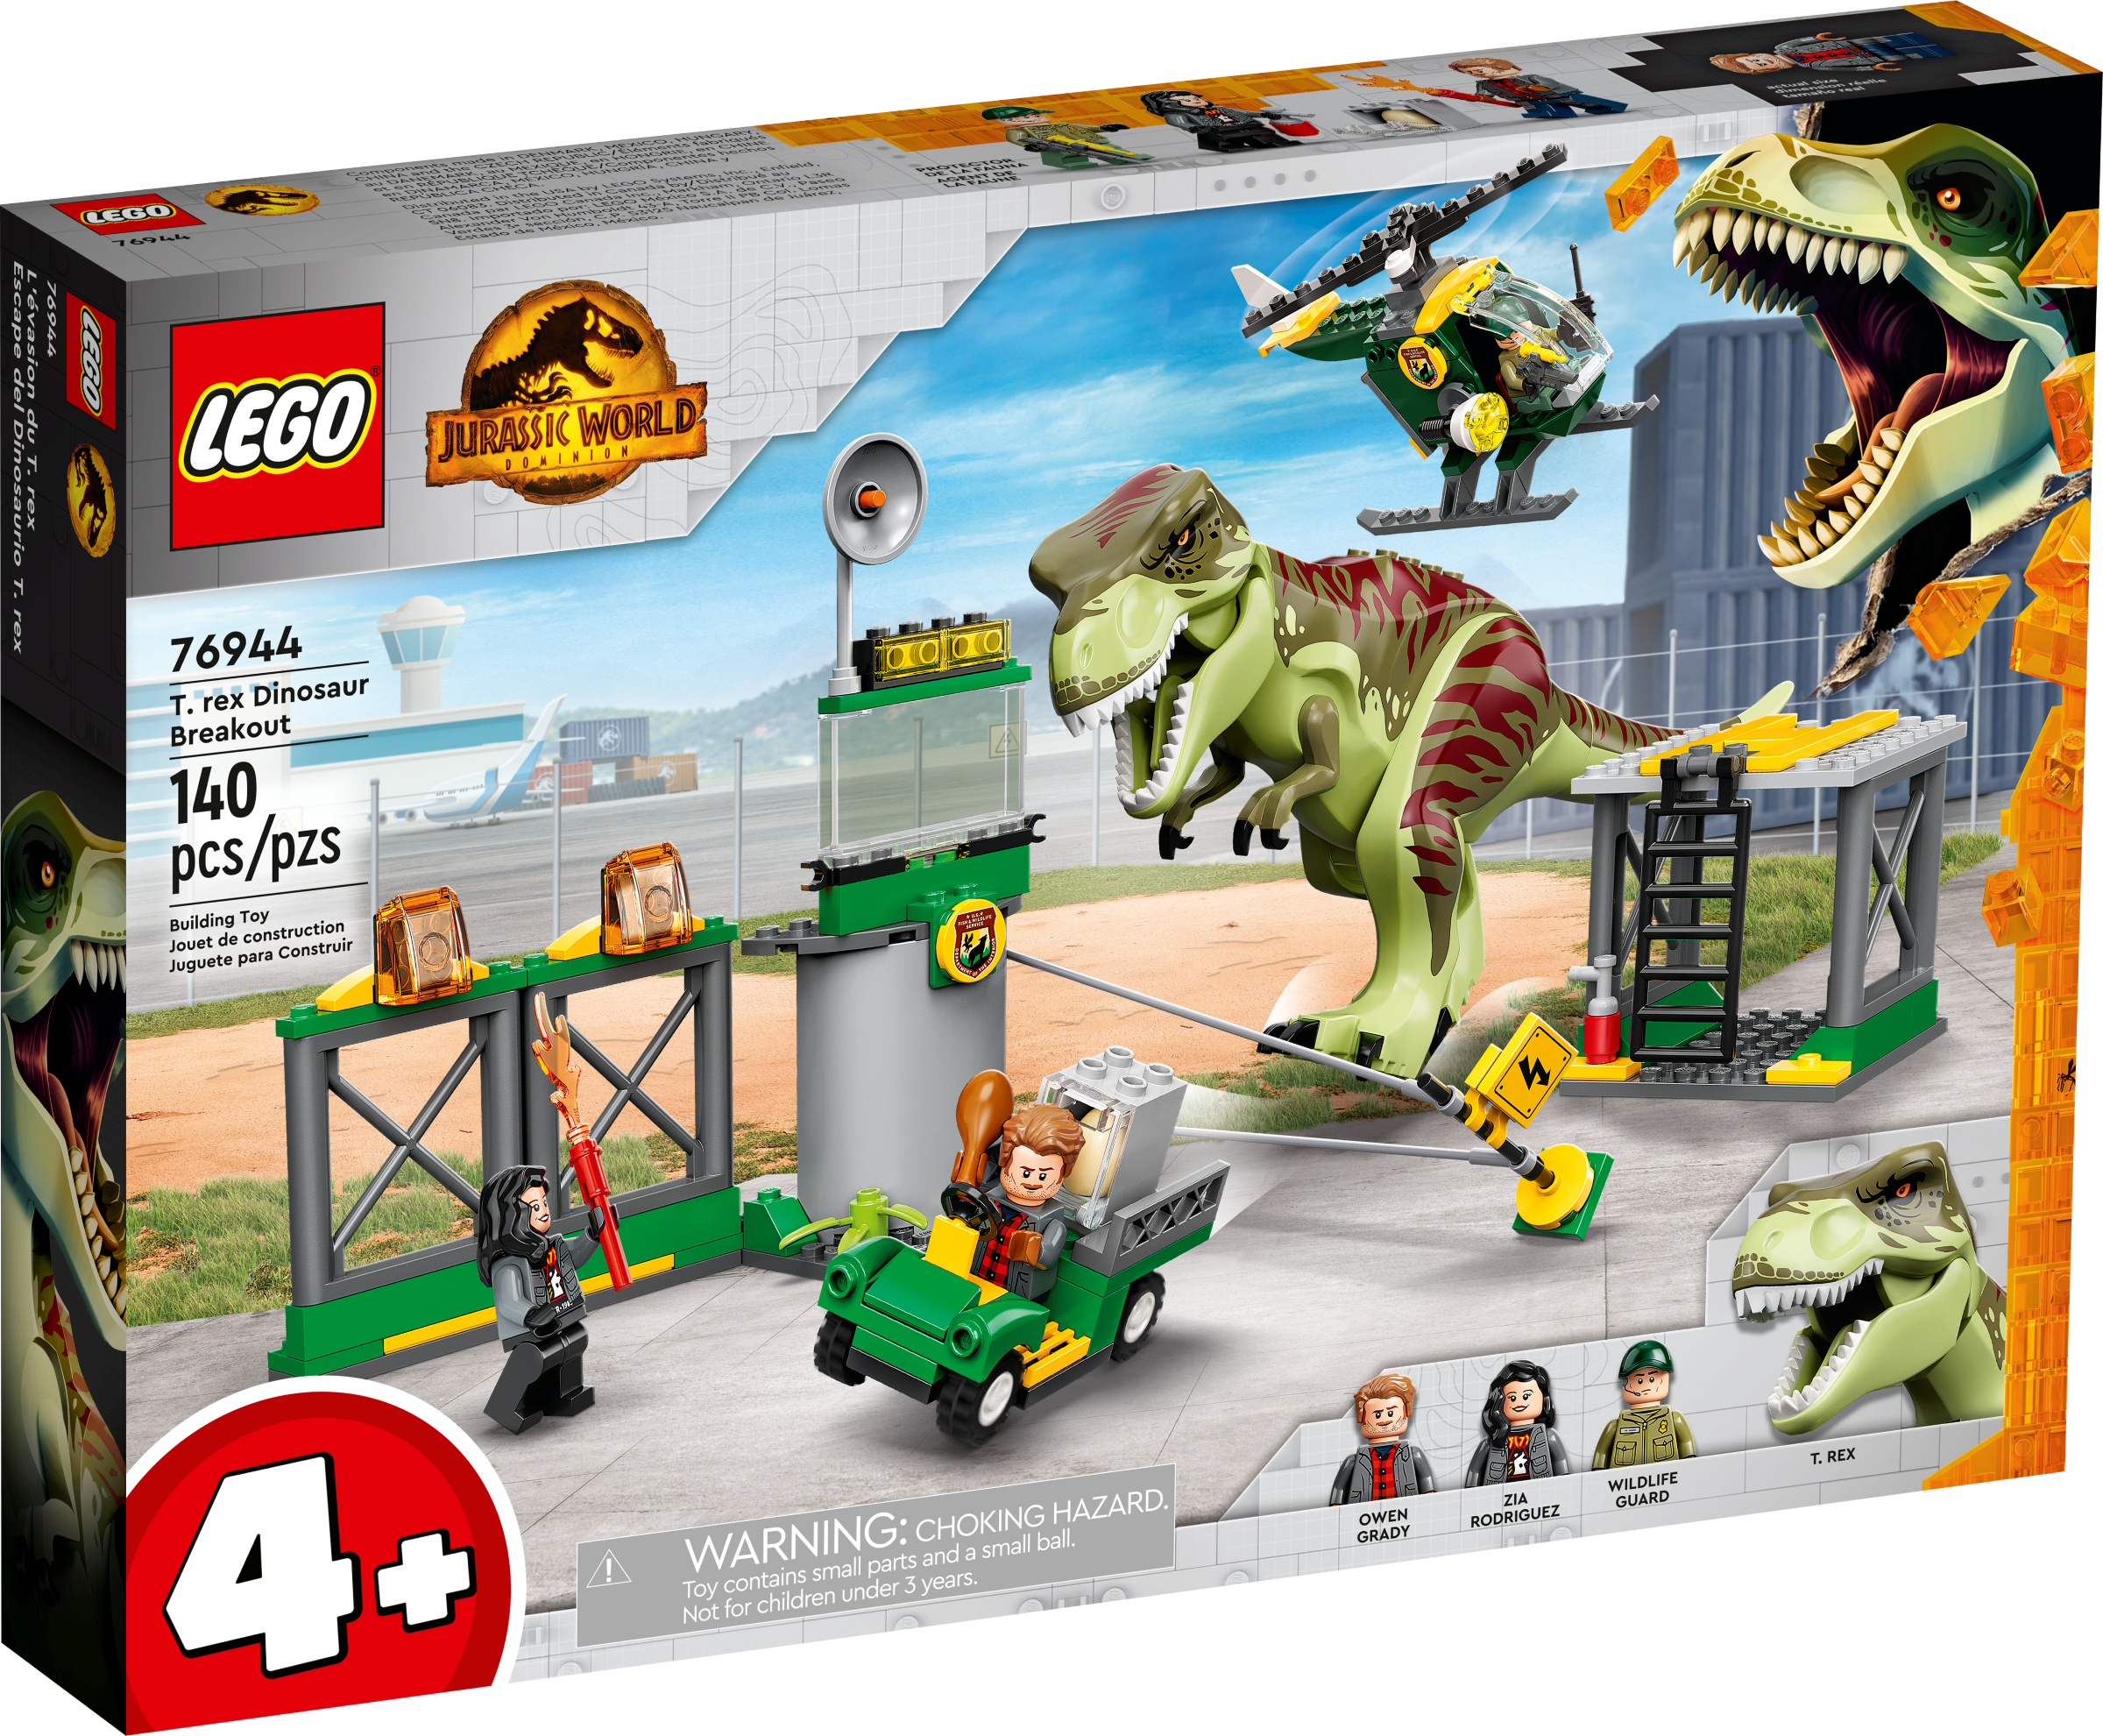 Tyrannosaurus Rex - LEGO® Animal – Bricks & Minifigs Eugene